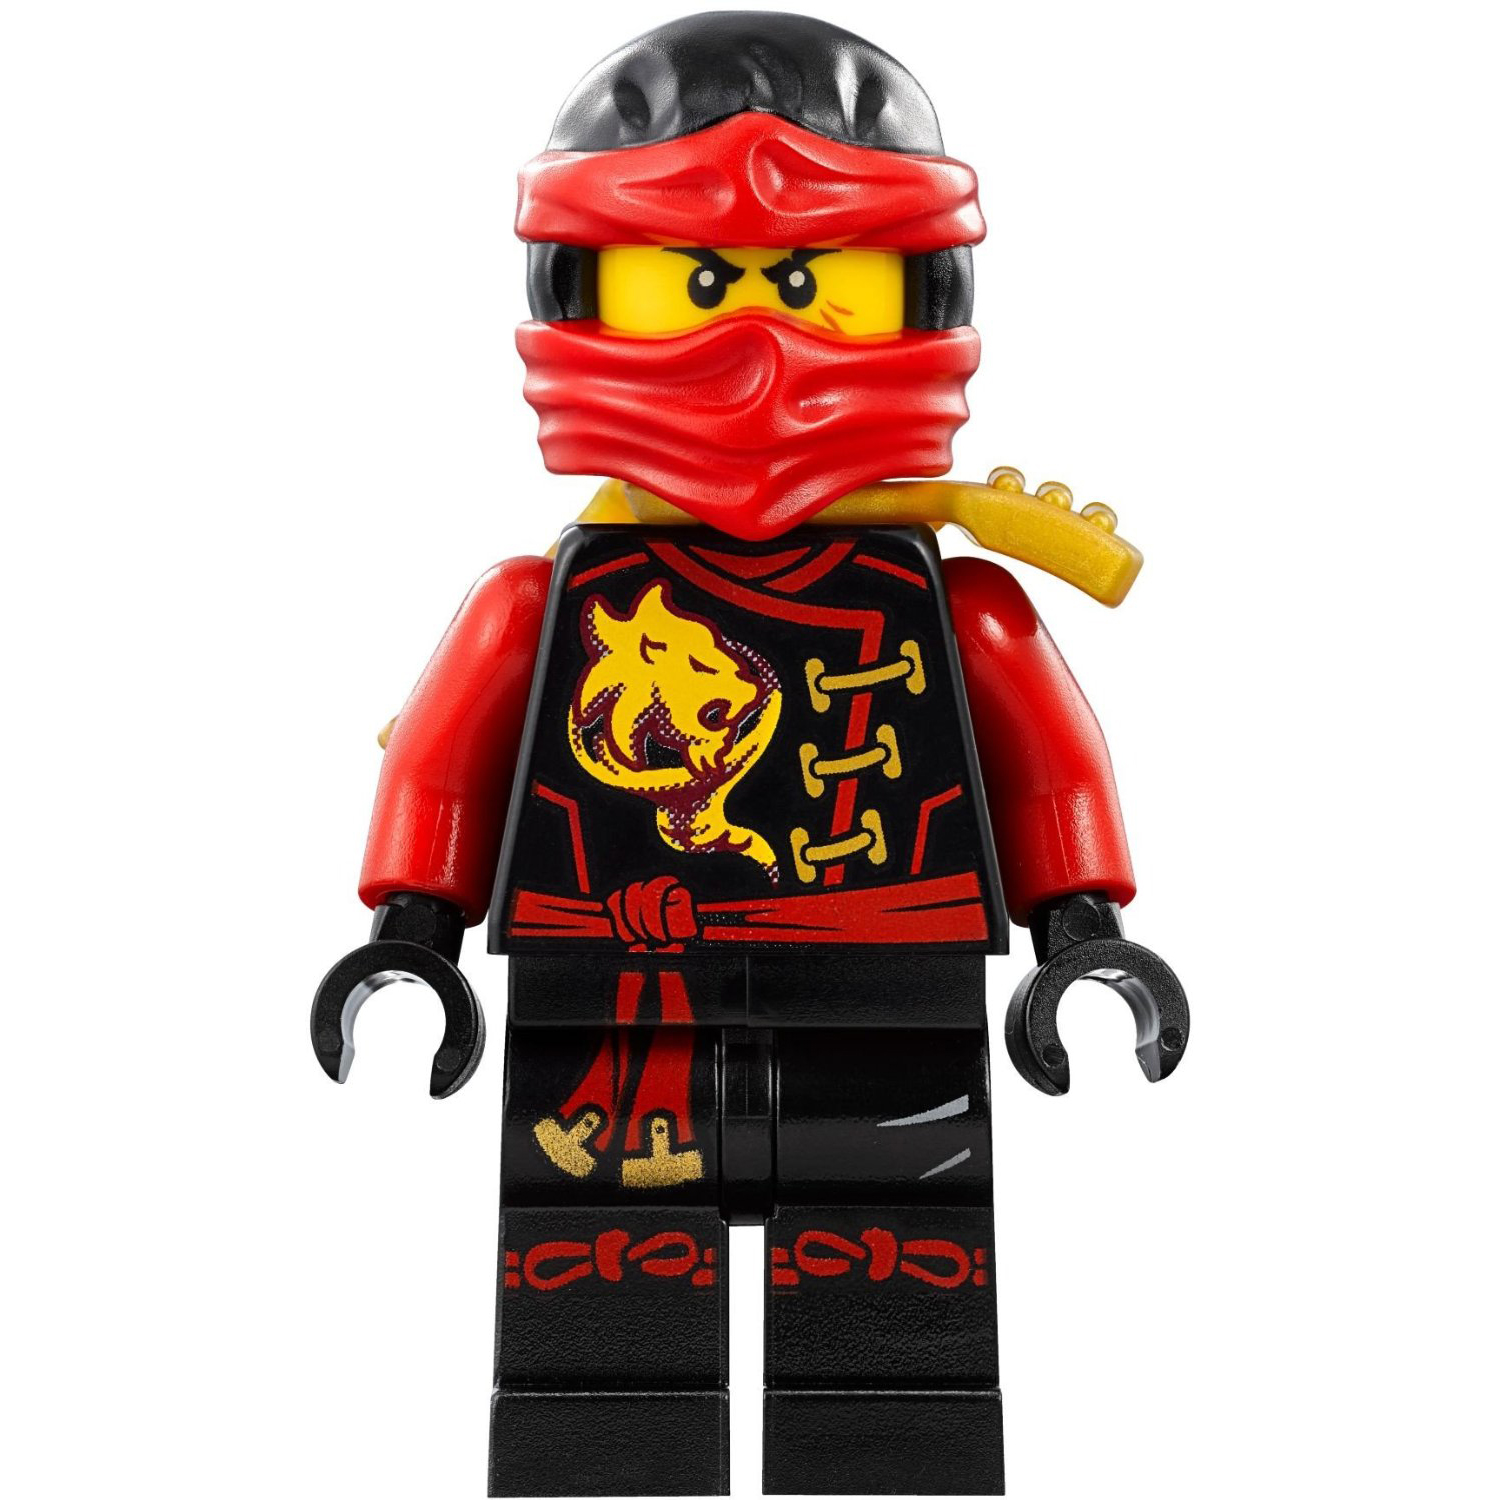 Lego Ninjago. Побег из тюрьмы Криптариум  